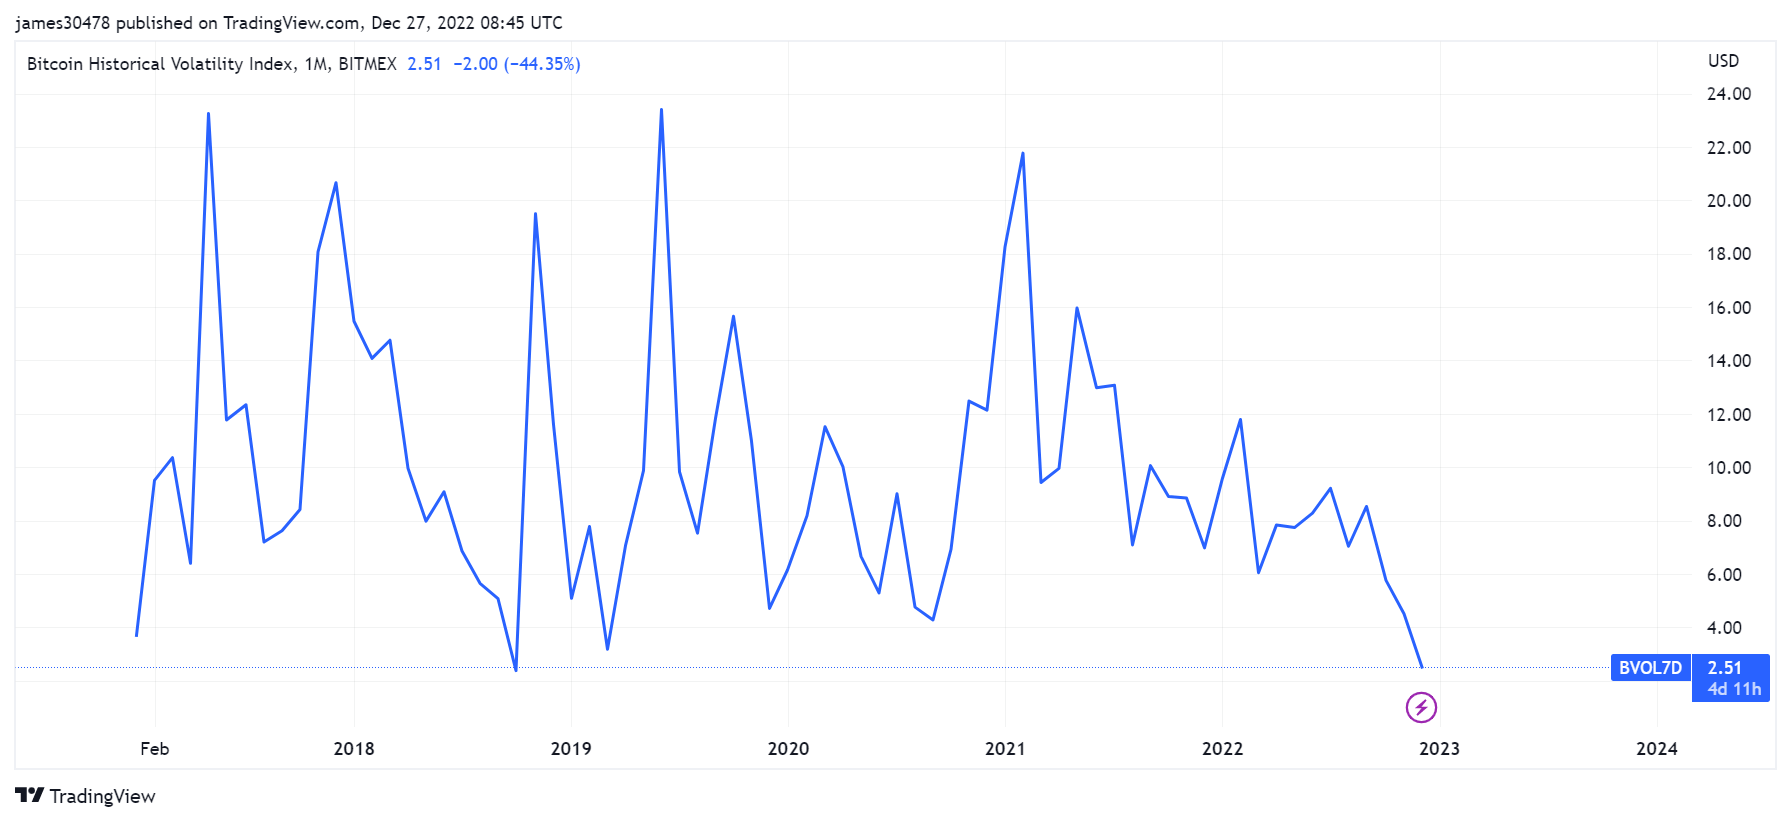 BTC volatility index (7-day moving average)